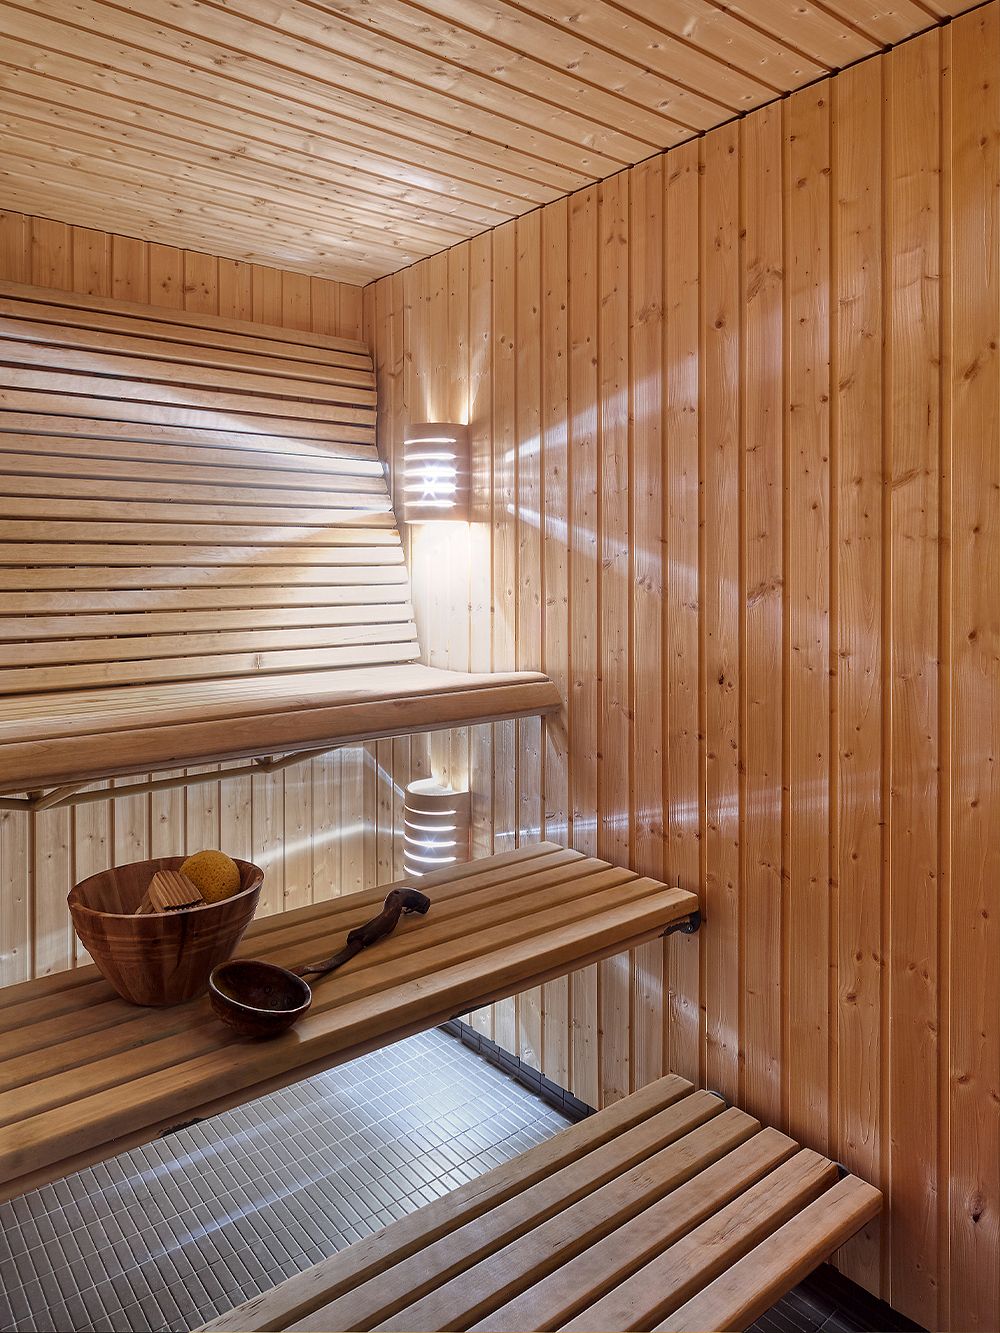 A Finnish sauna interior designed by Ilmari Tapiovaara.